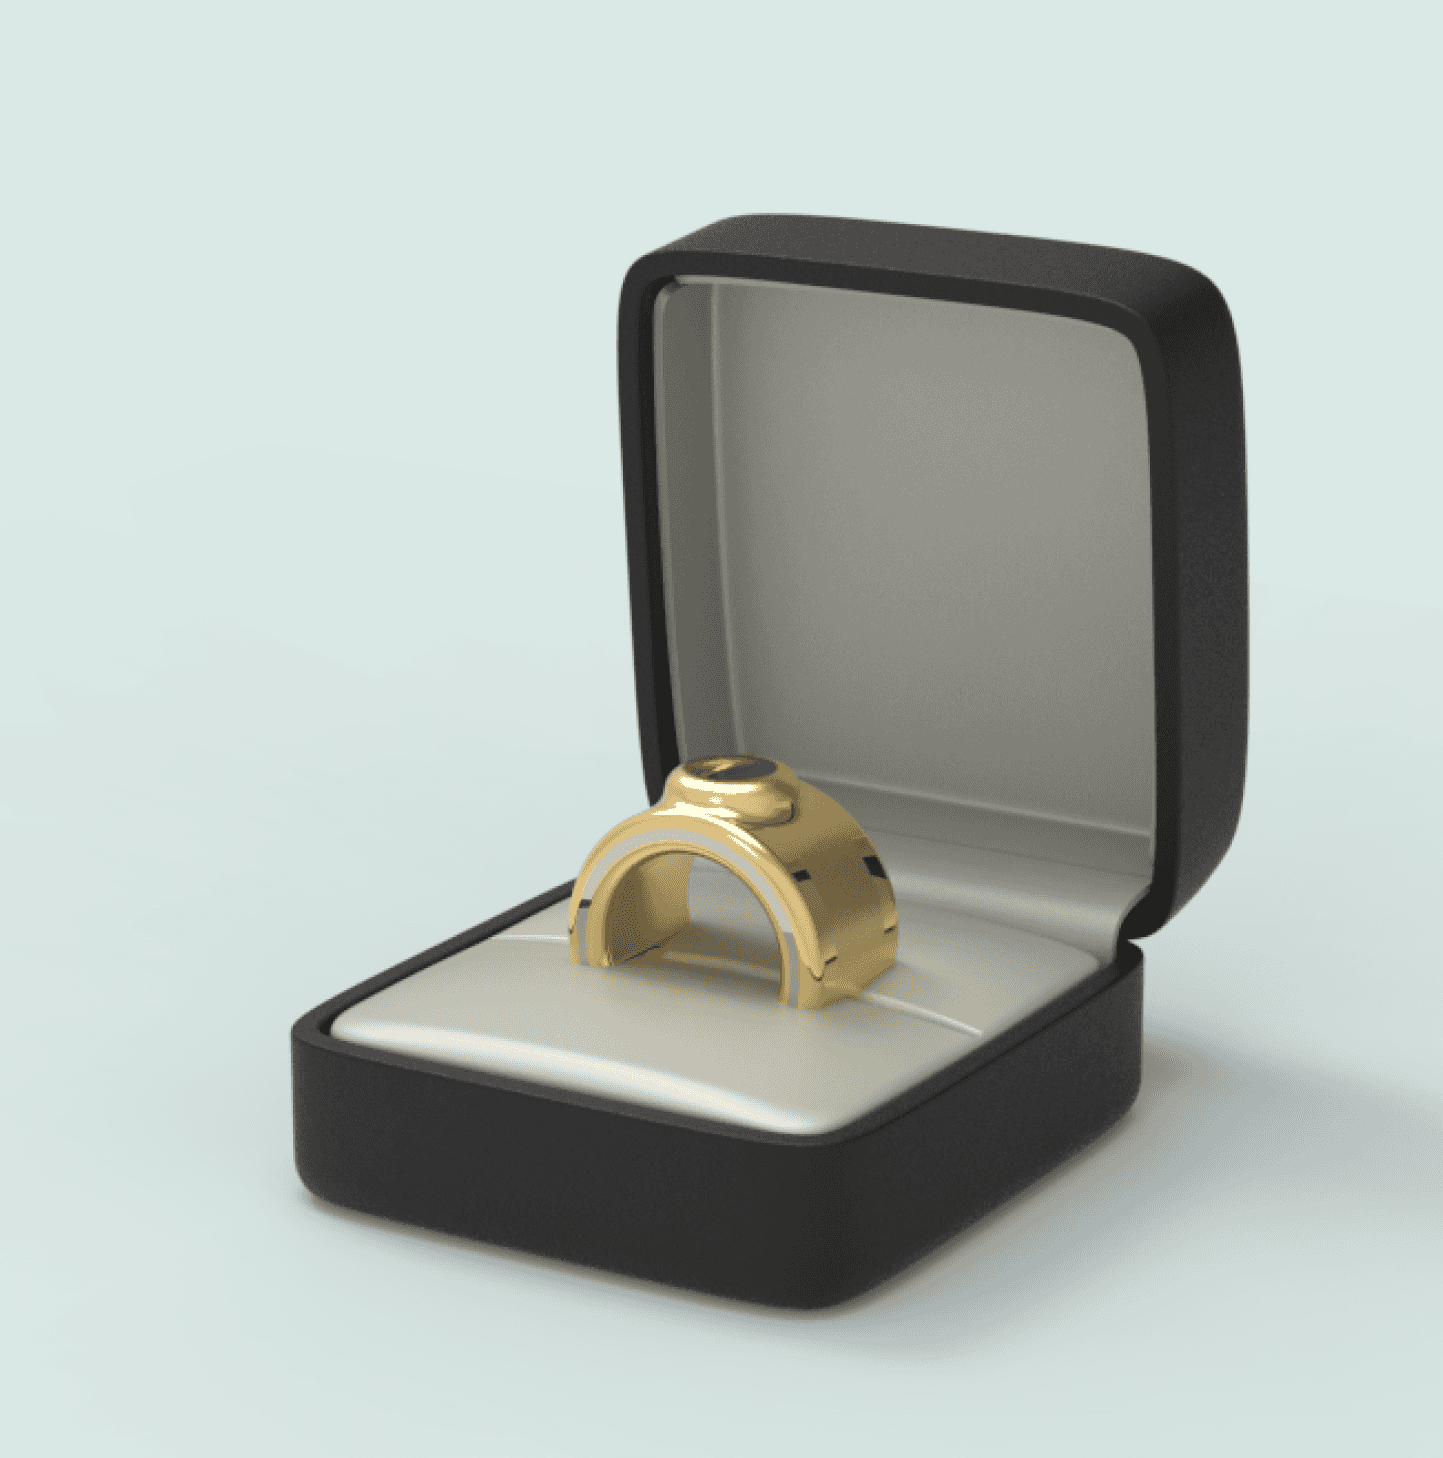 Smart ring